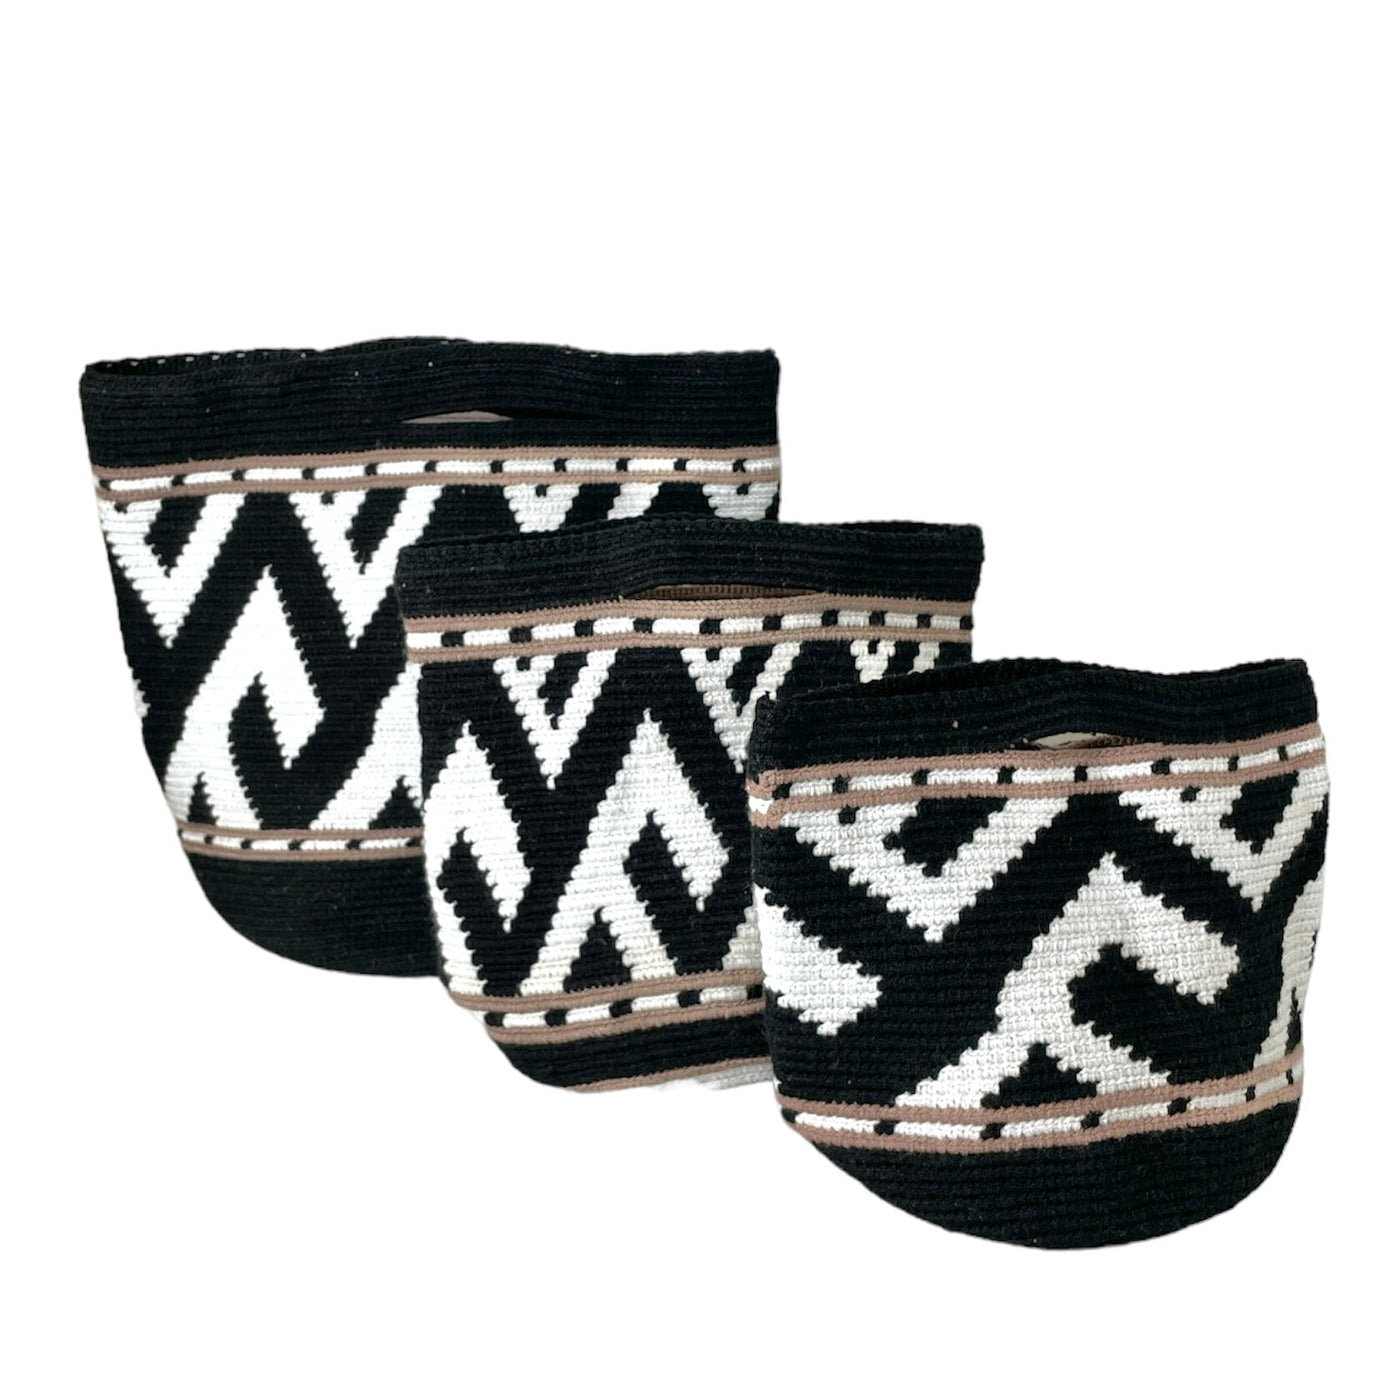 Fashion Clutch Bags | Crochet Clutch Purse | Neutral Top Handle Clutch by Colorful 4U